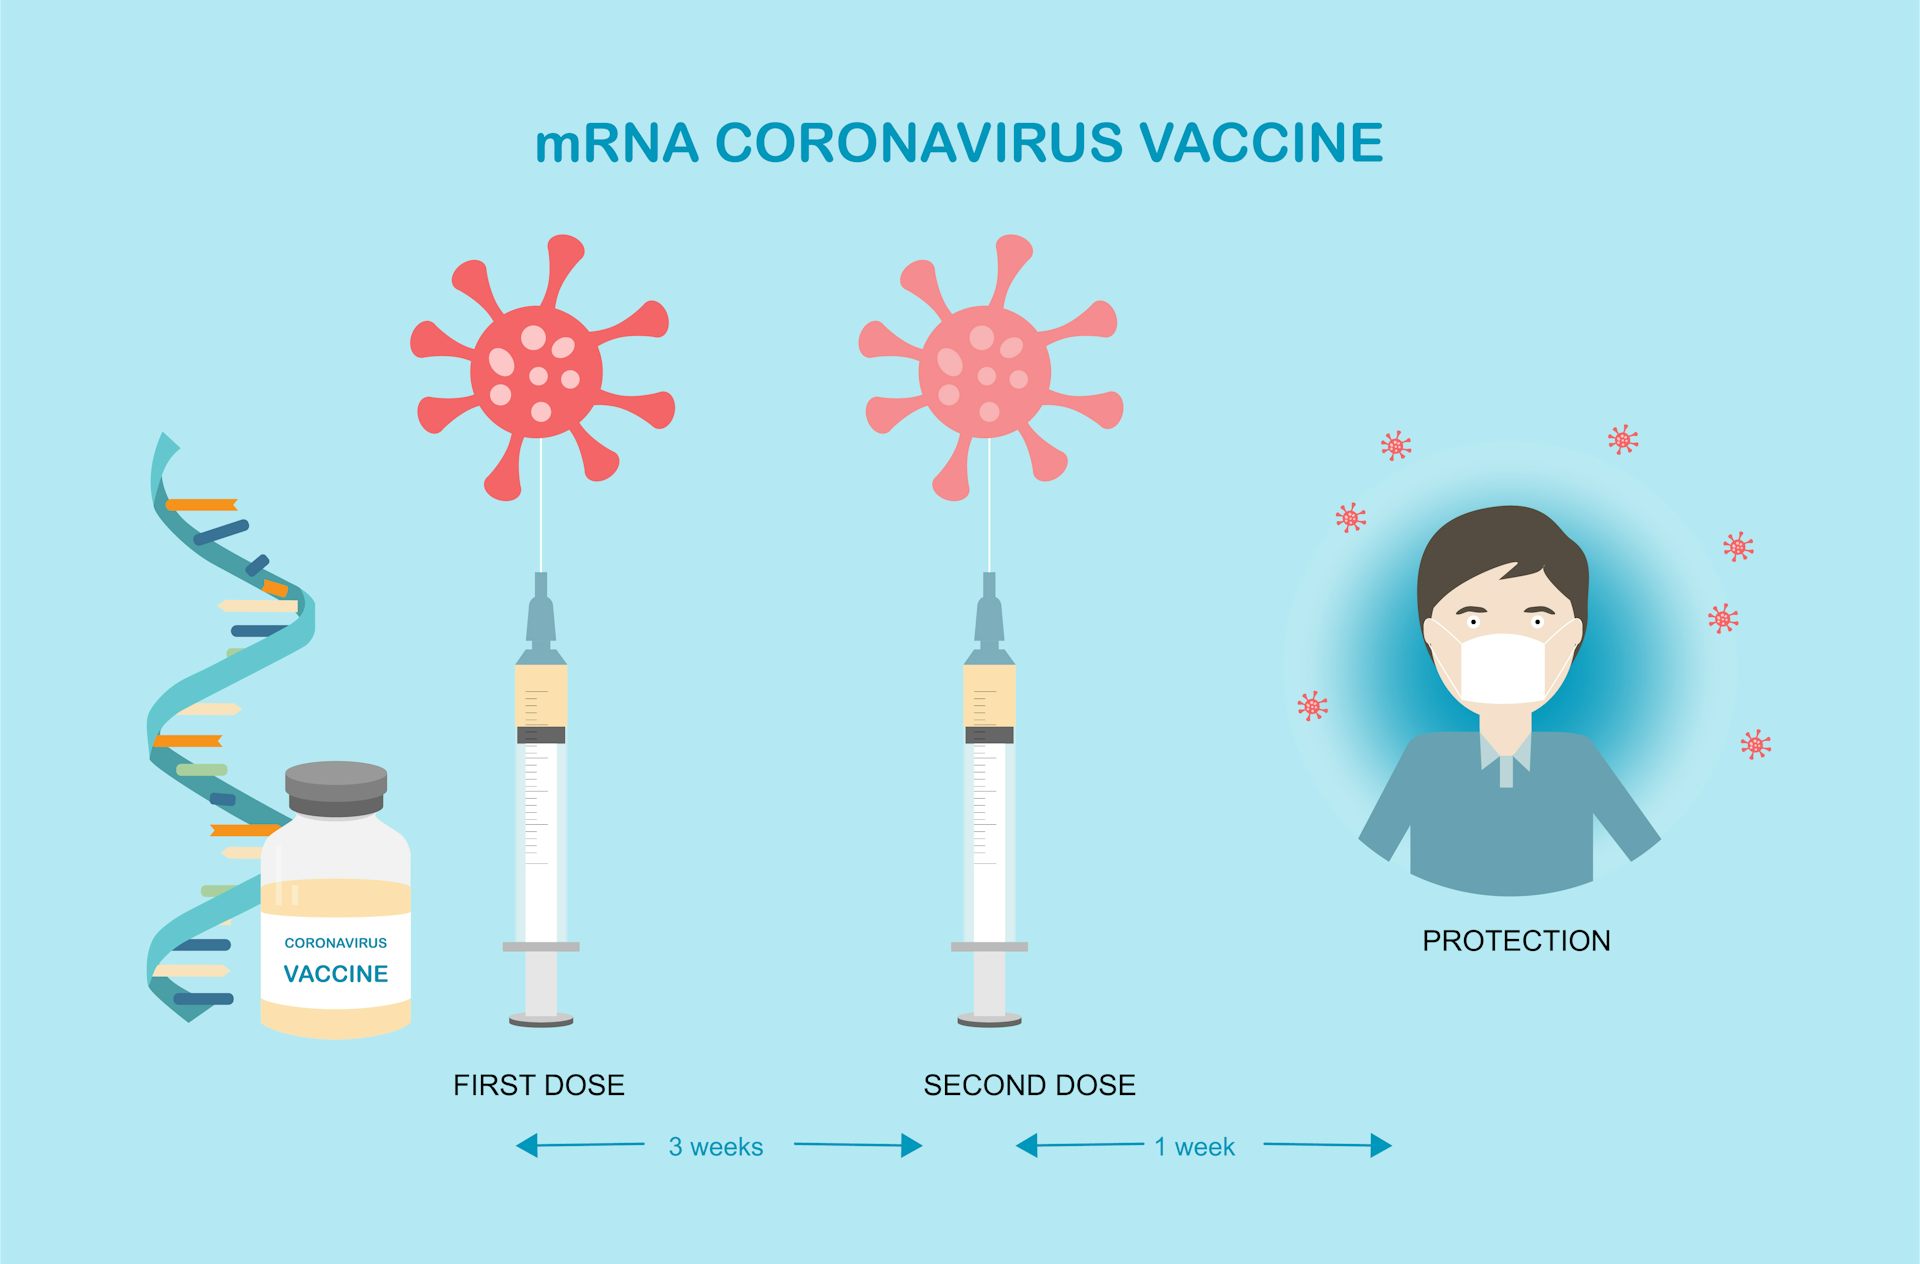 messenger rna vaccine